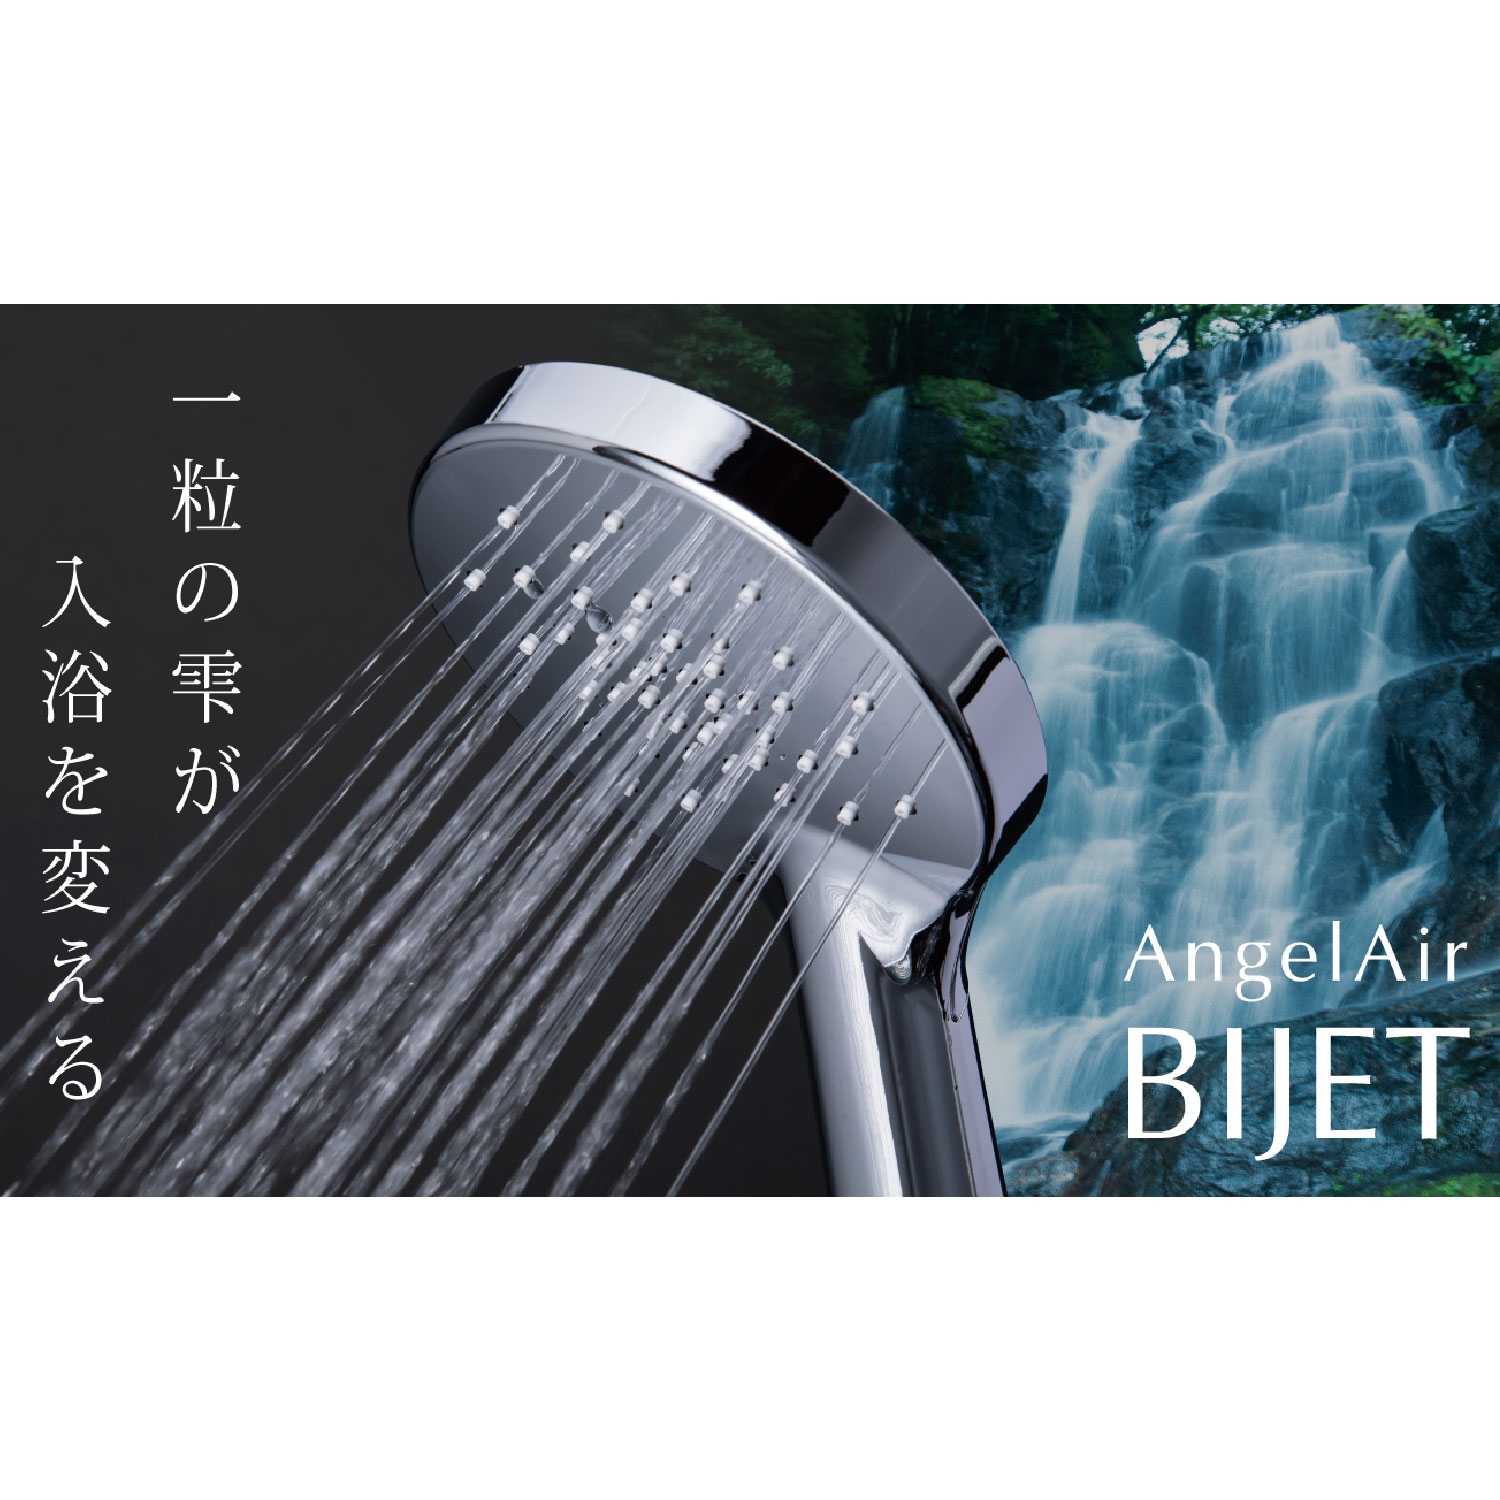 Bijet Angel Air シャワーヘッド